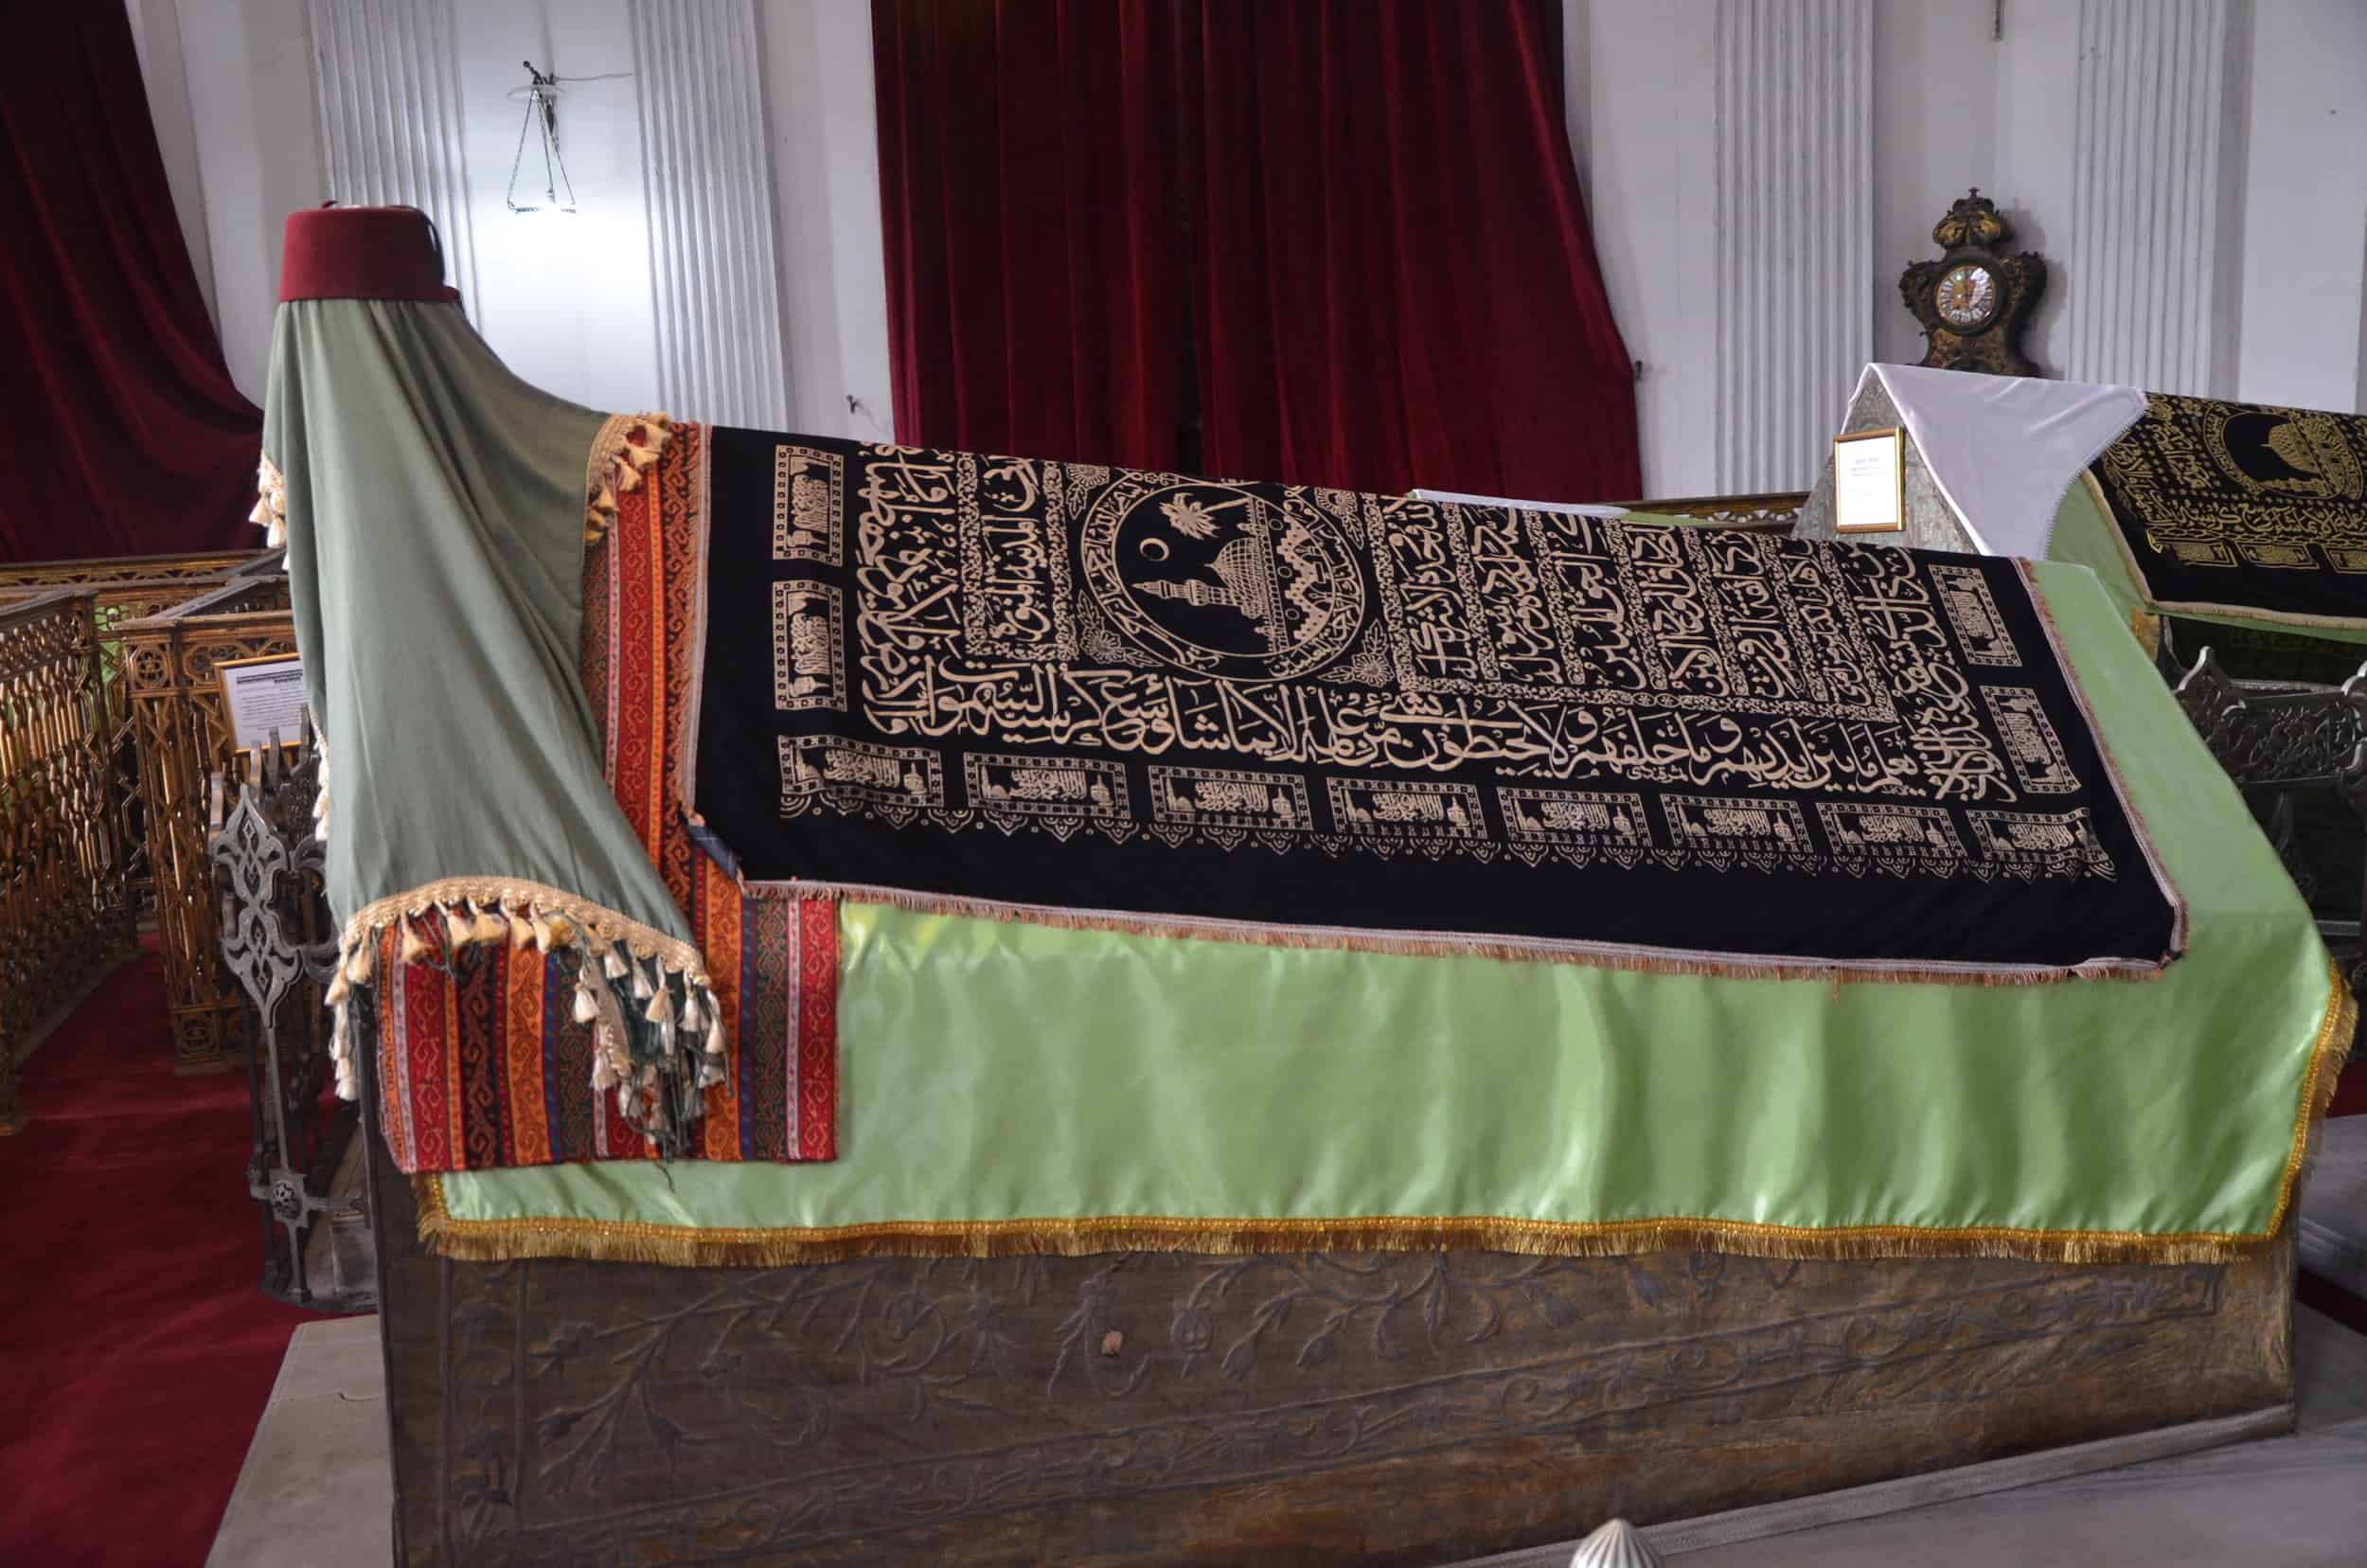 Sarcophagus of Sultan Abdülaziz